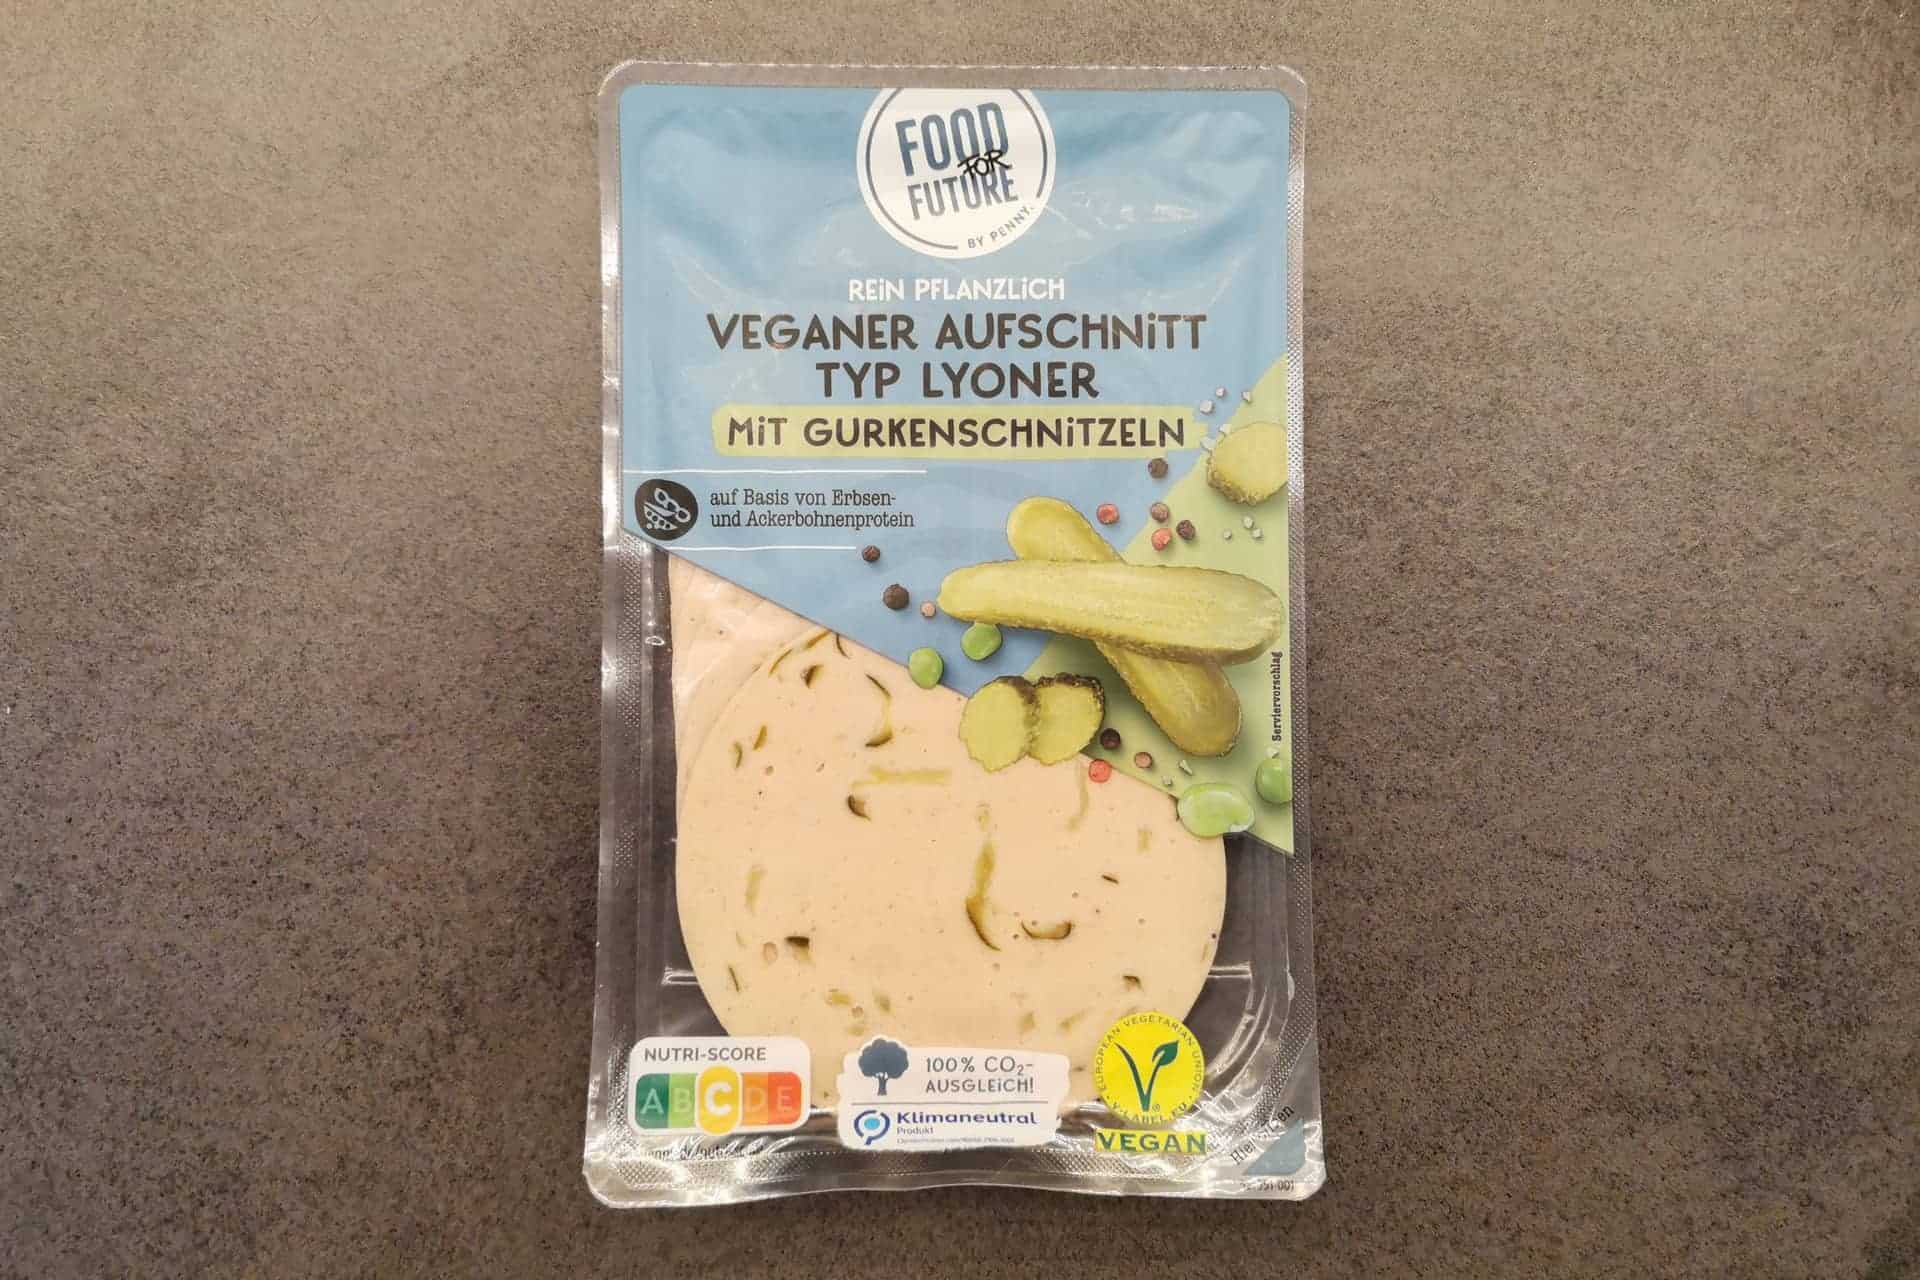 Food for Future: Veganer Aufschnitt Lyoner mit Gurkenschnitzeln